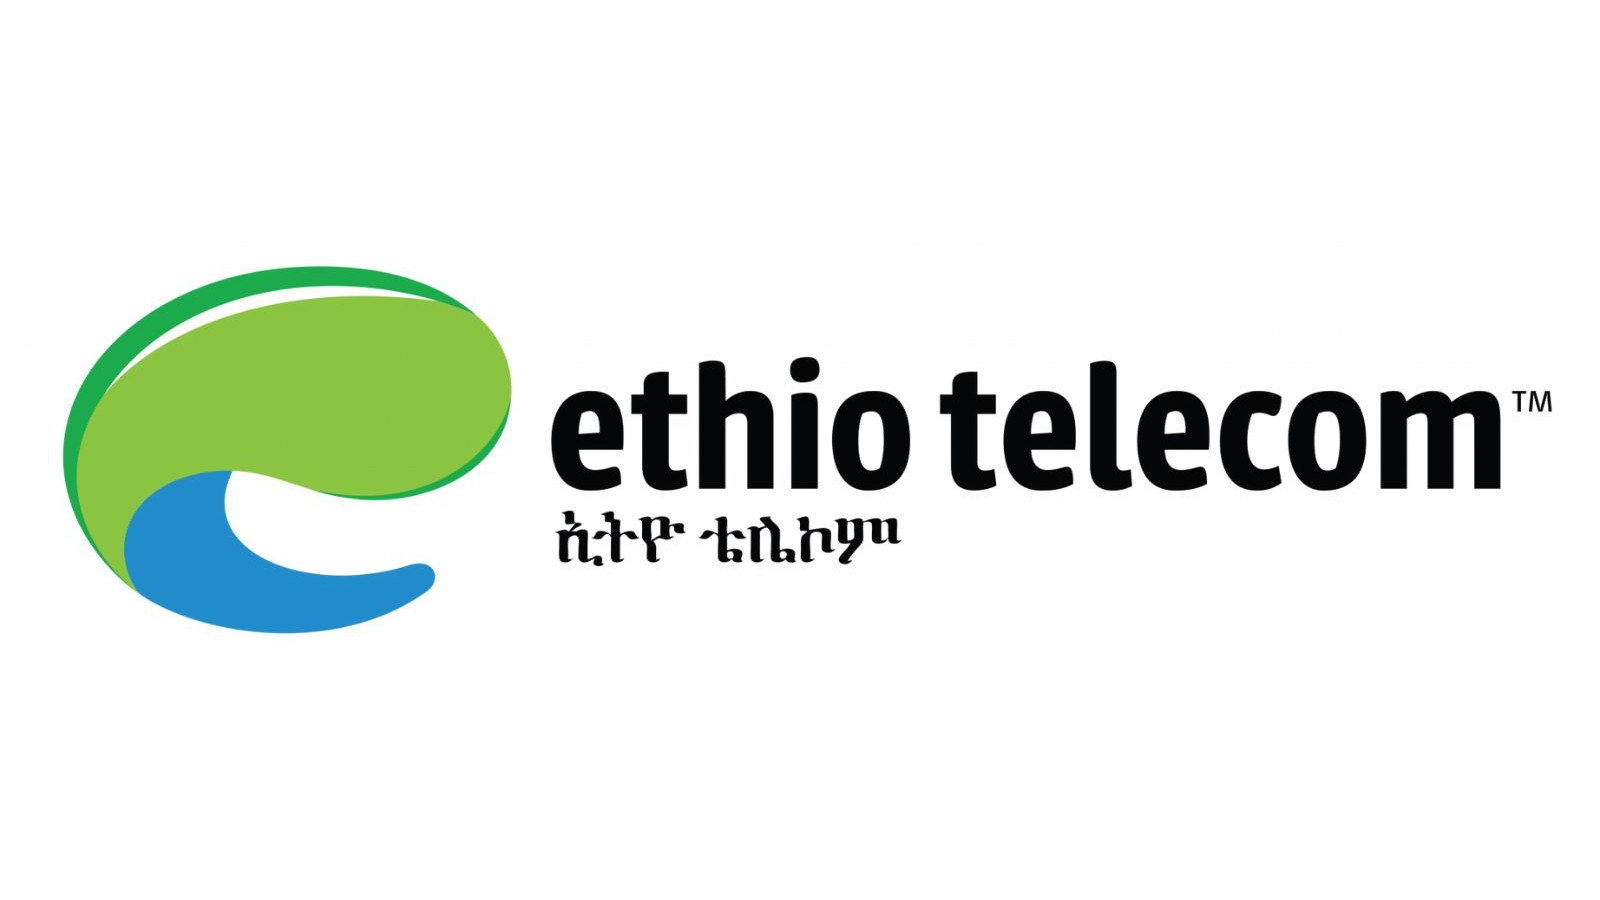 [$ 0.68] Ethiotelecom 5 ETB Mobile Top-up ET